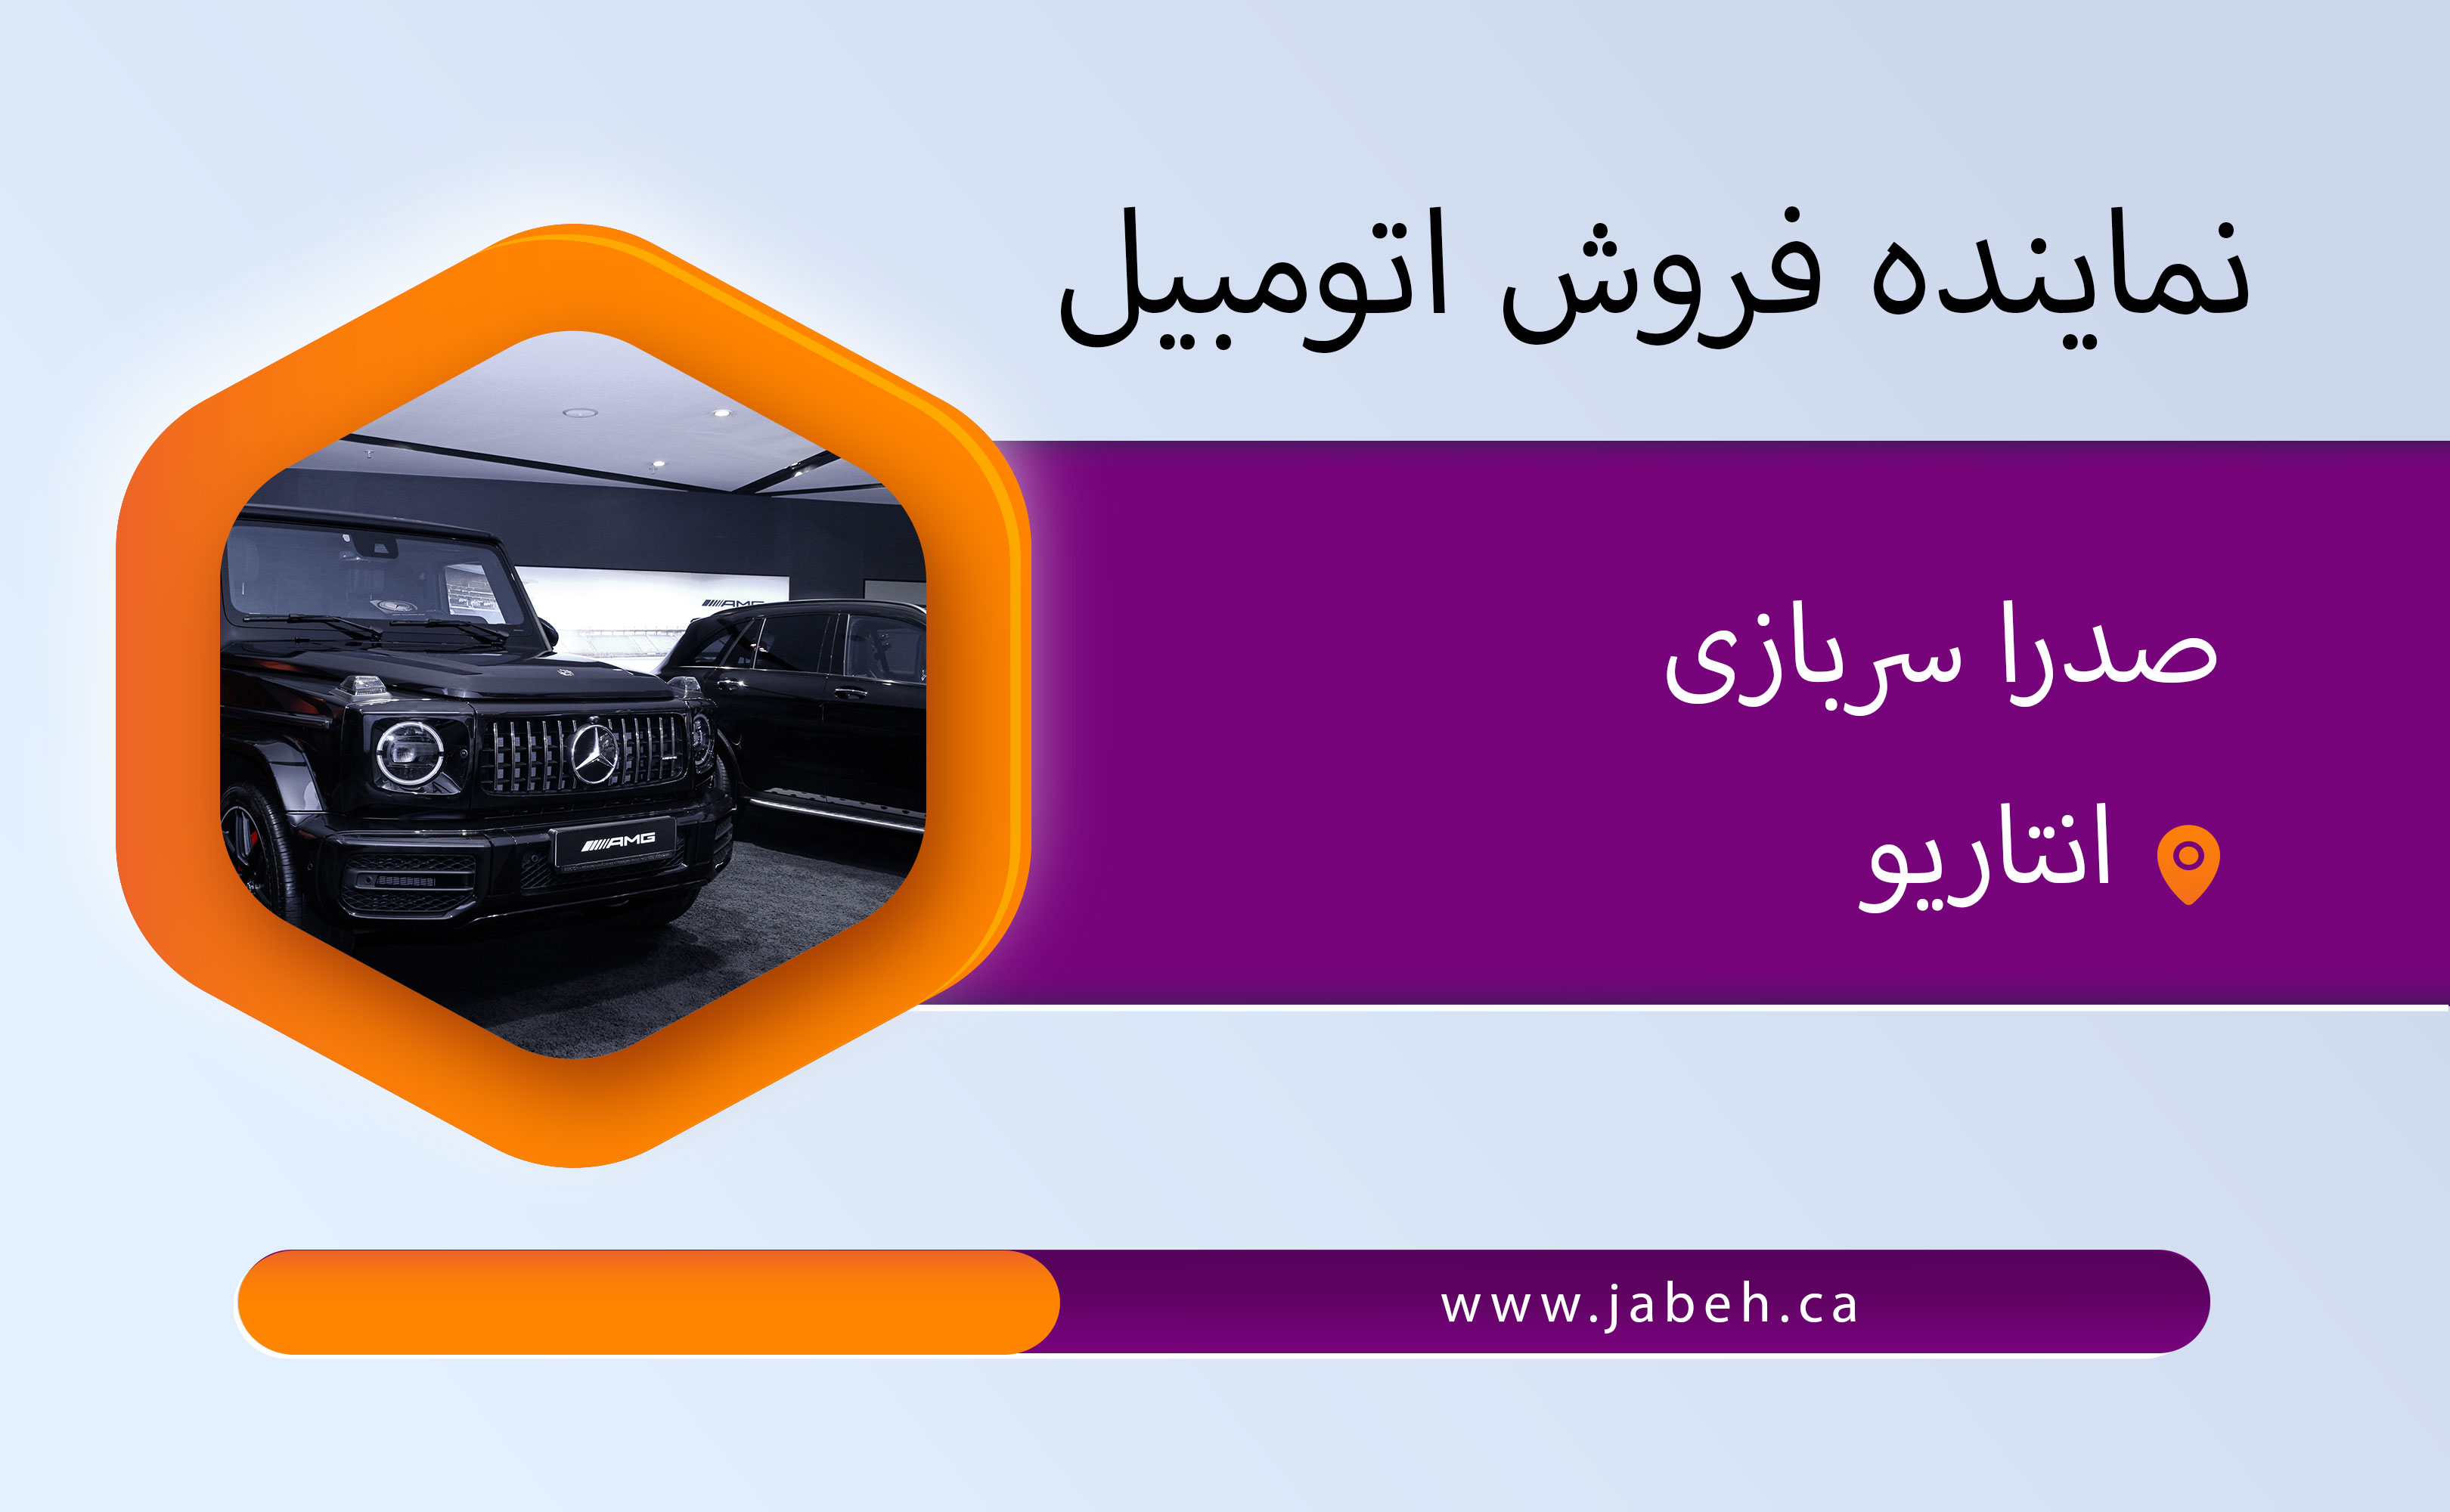 Iranian sales representative of Sadra Sarzabi cars in Ontario